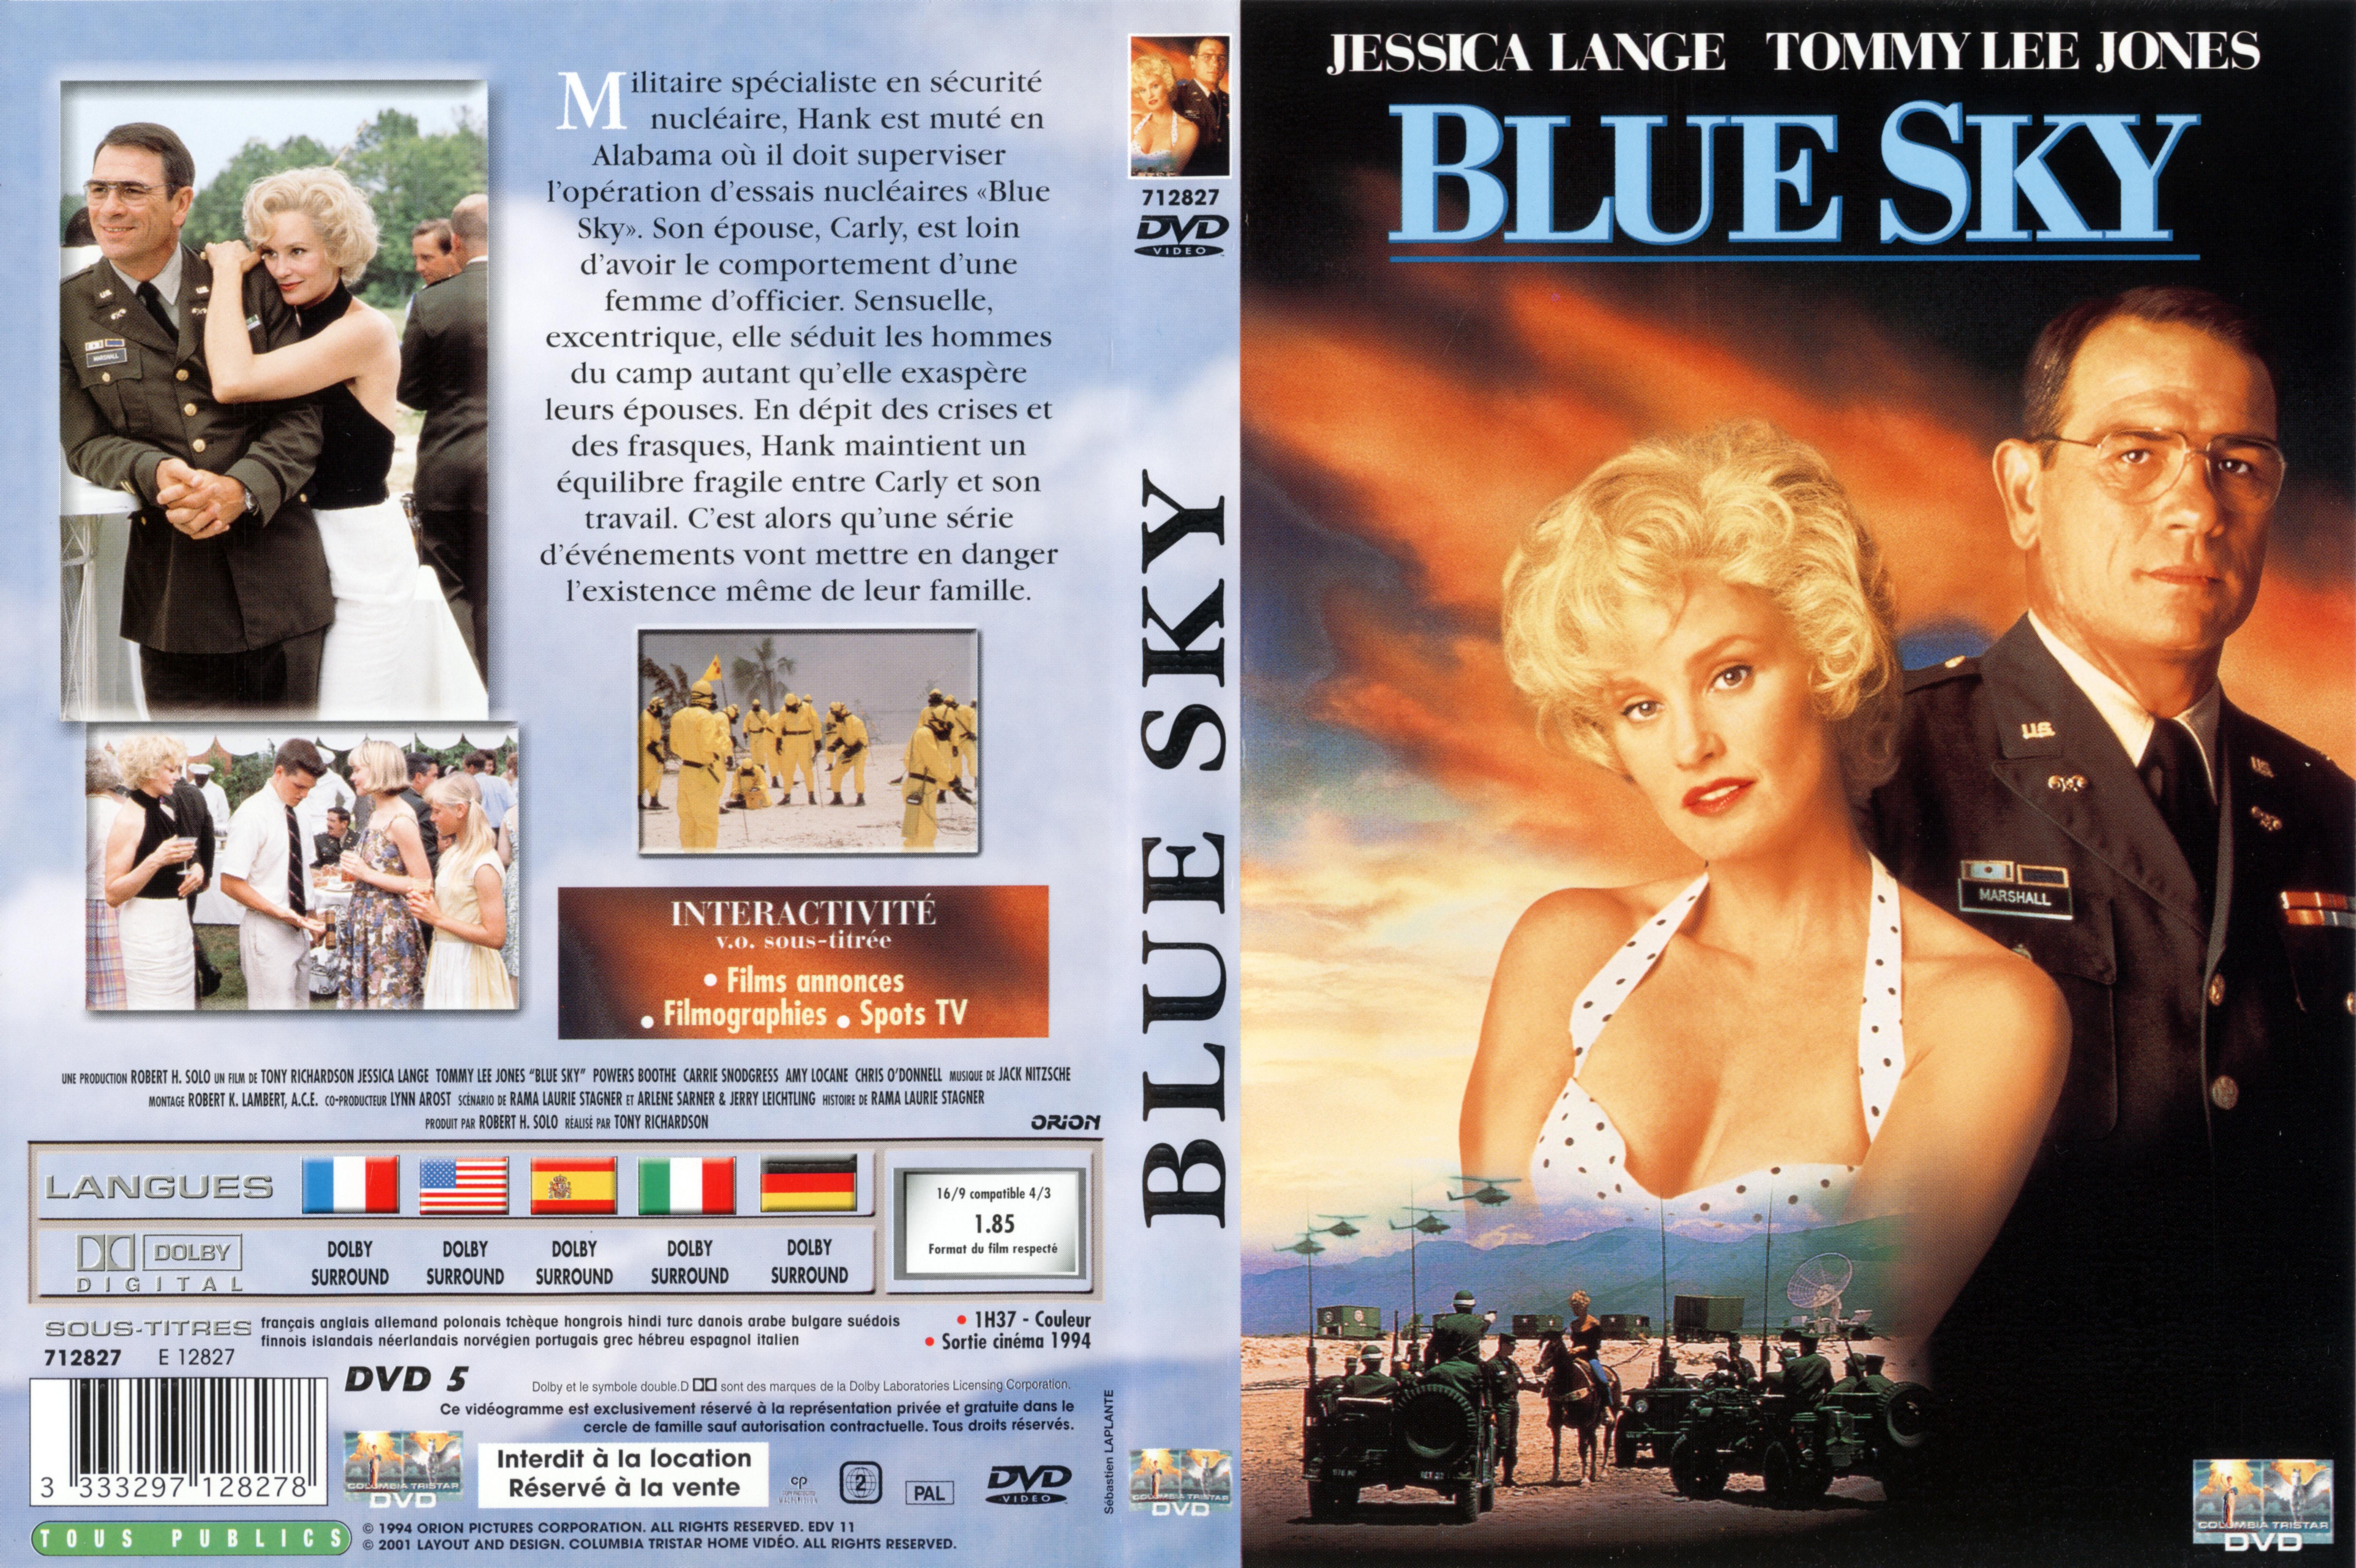 Jaquette DVD Blue sky